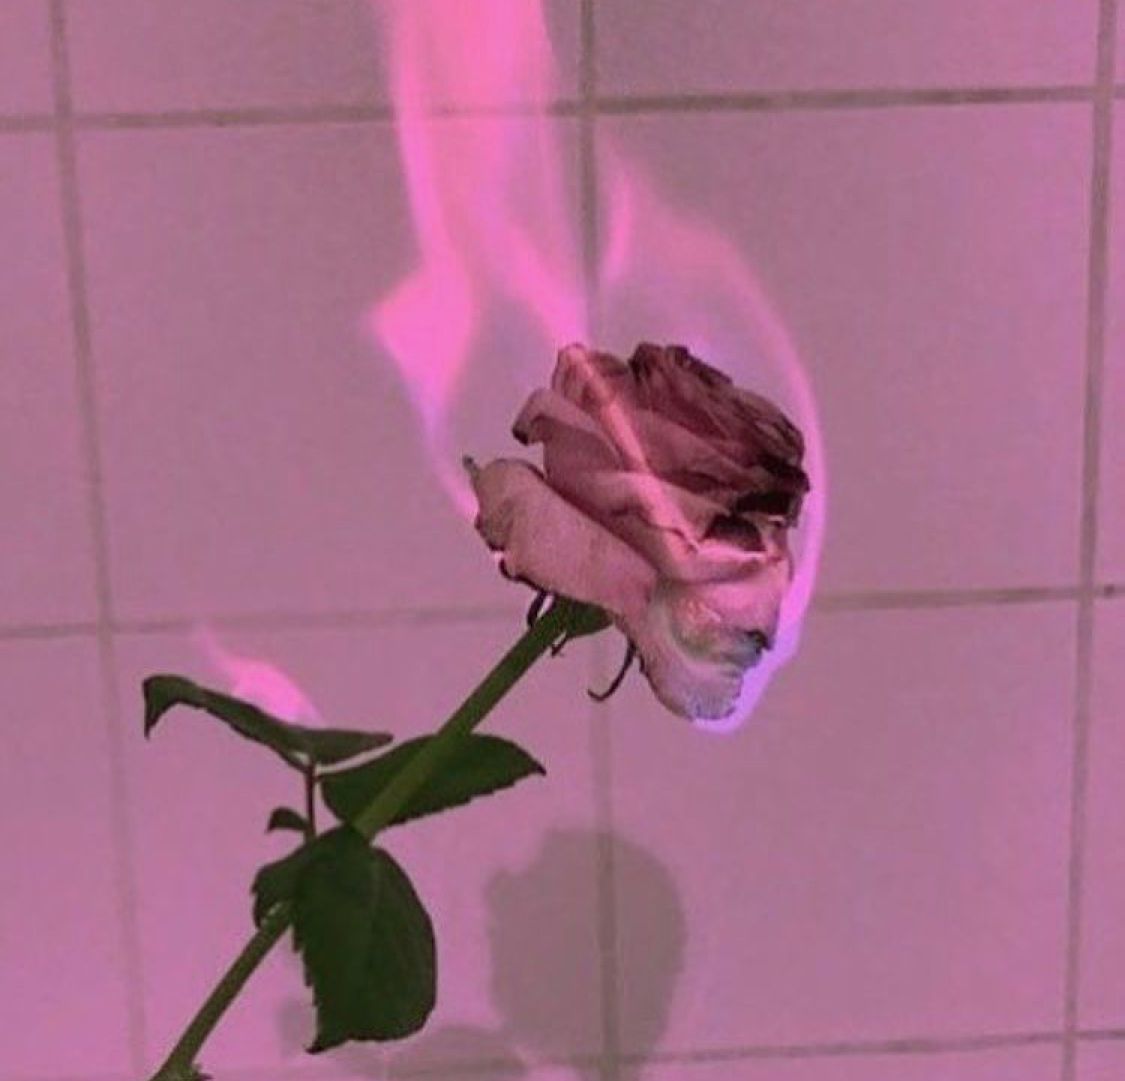 Retro Grunge Aesthetic Wallpaper iPhone. Retro Grunge Aesthetic Wallpaper. Aesthetic roses, Pink aesthetic, Pastel pink aesthetic